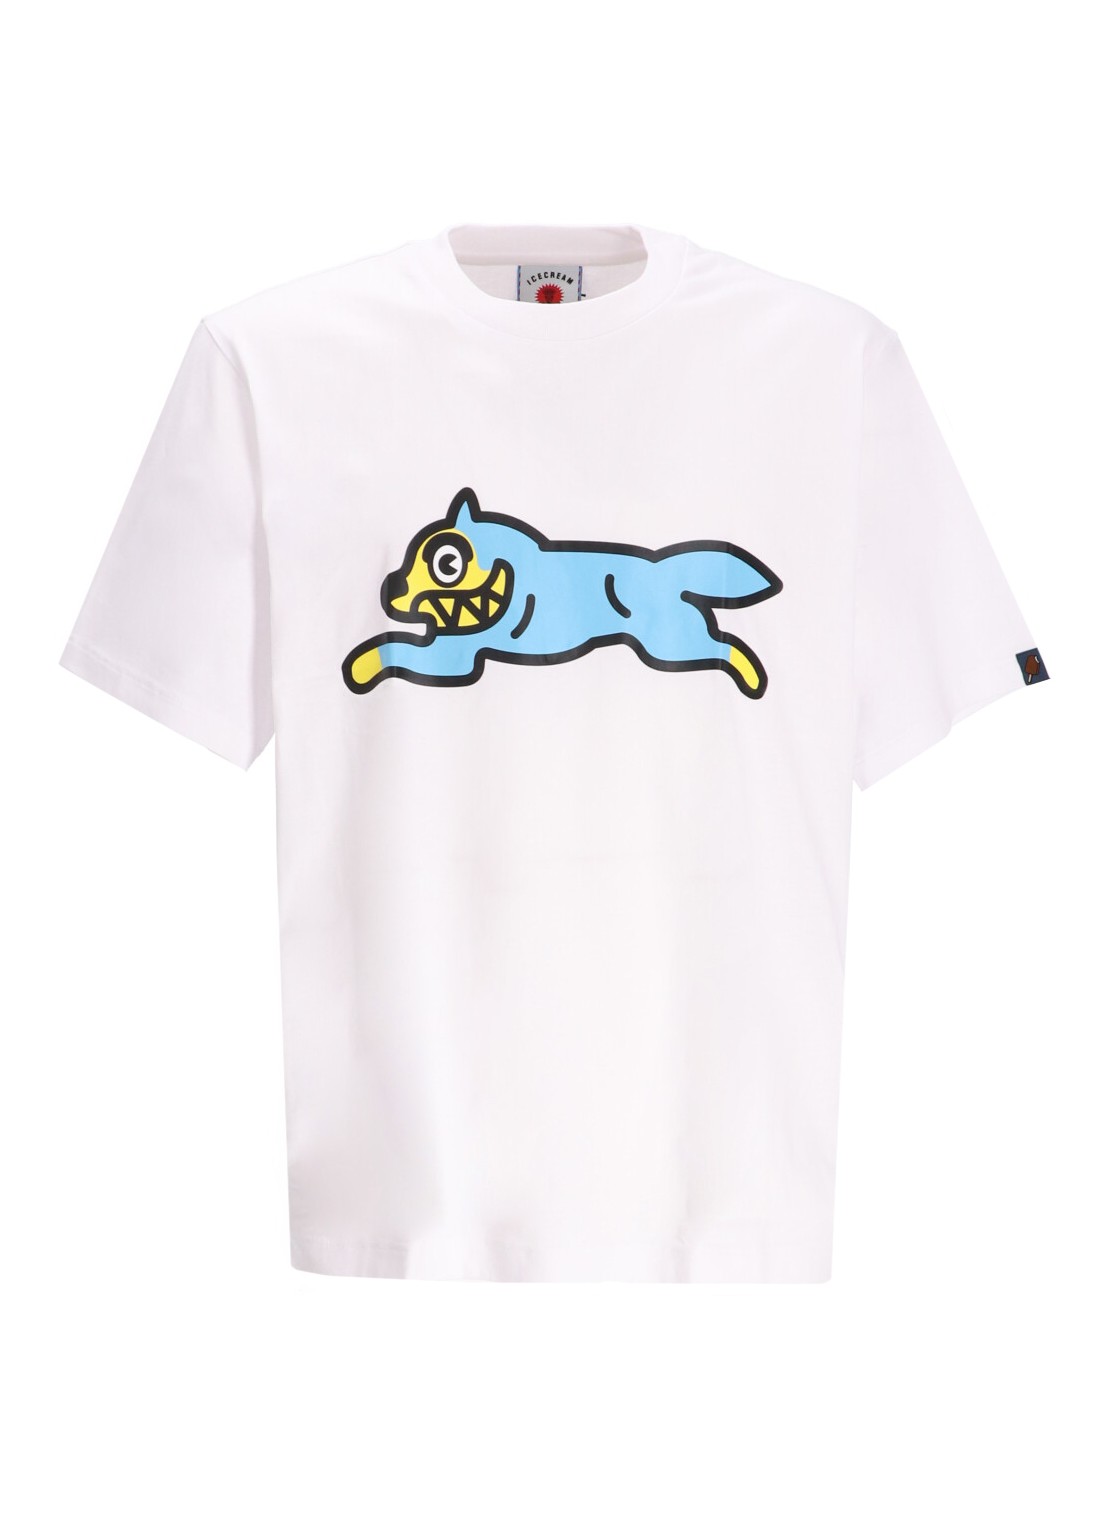 Camiseta icecream t-shirt manrunning dog t-shirt - ic24236 white talla M
 